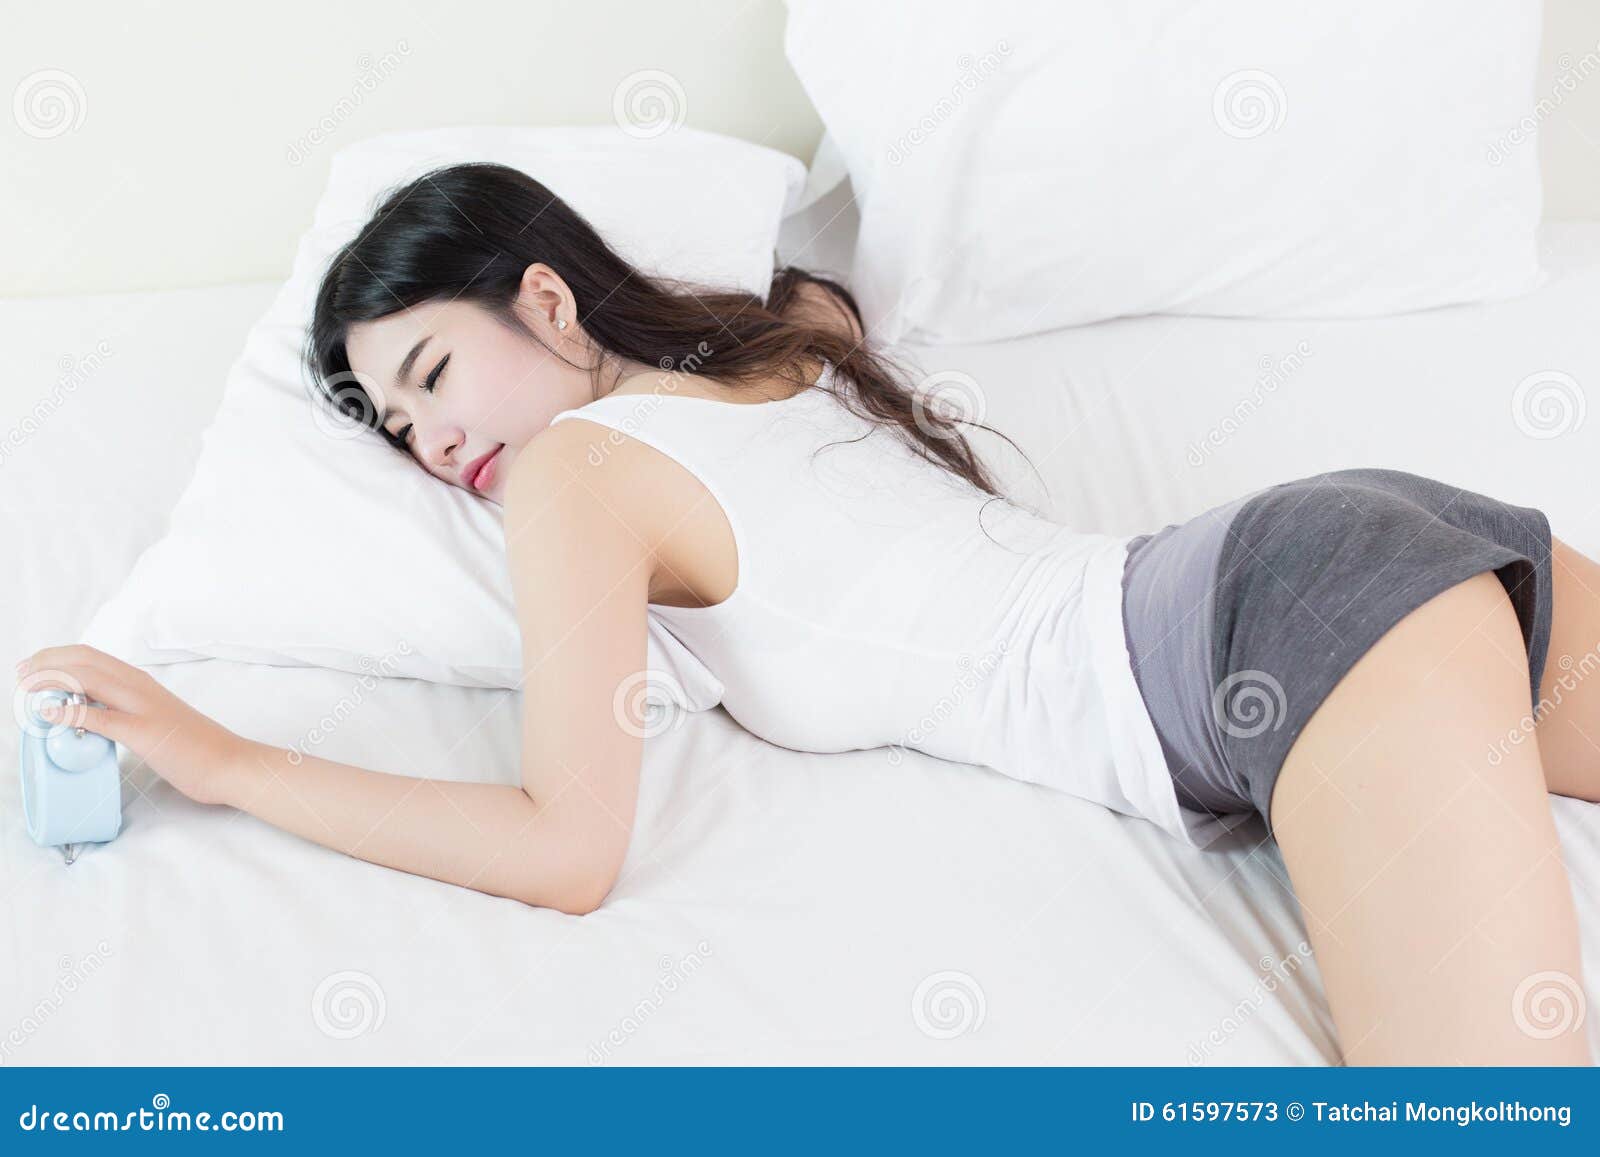 Hot asian girls sleeping